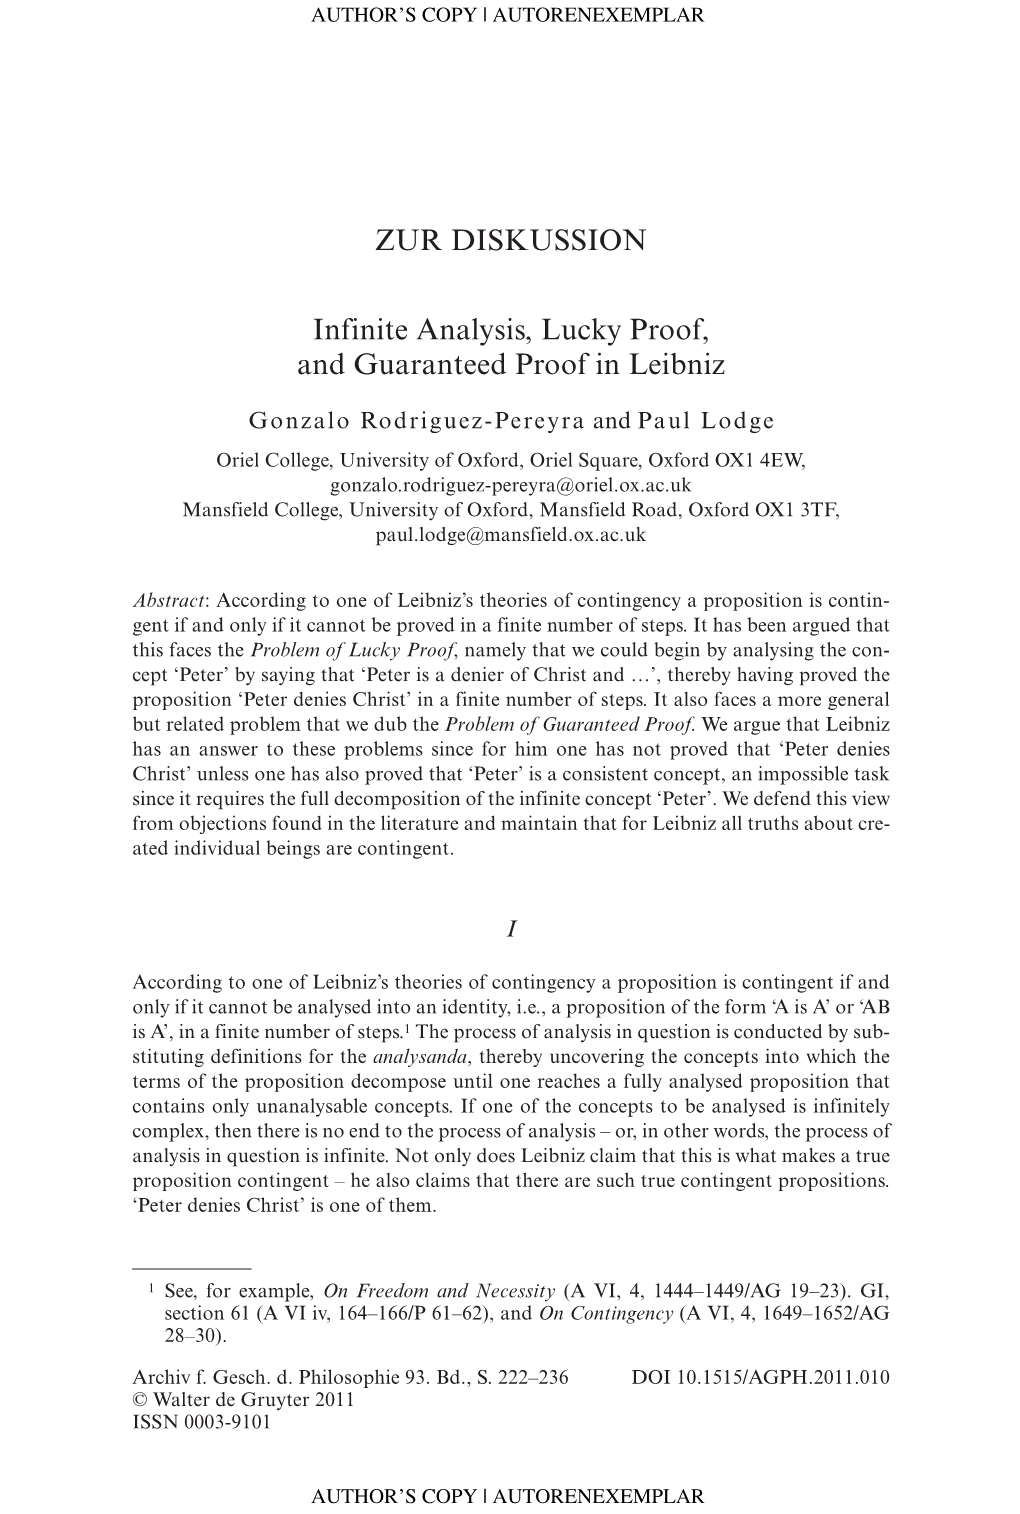 Infinite Analysis, Lucky Proof, and Guaranteed Proof in Leibniz